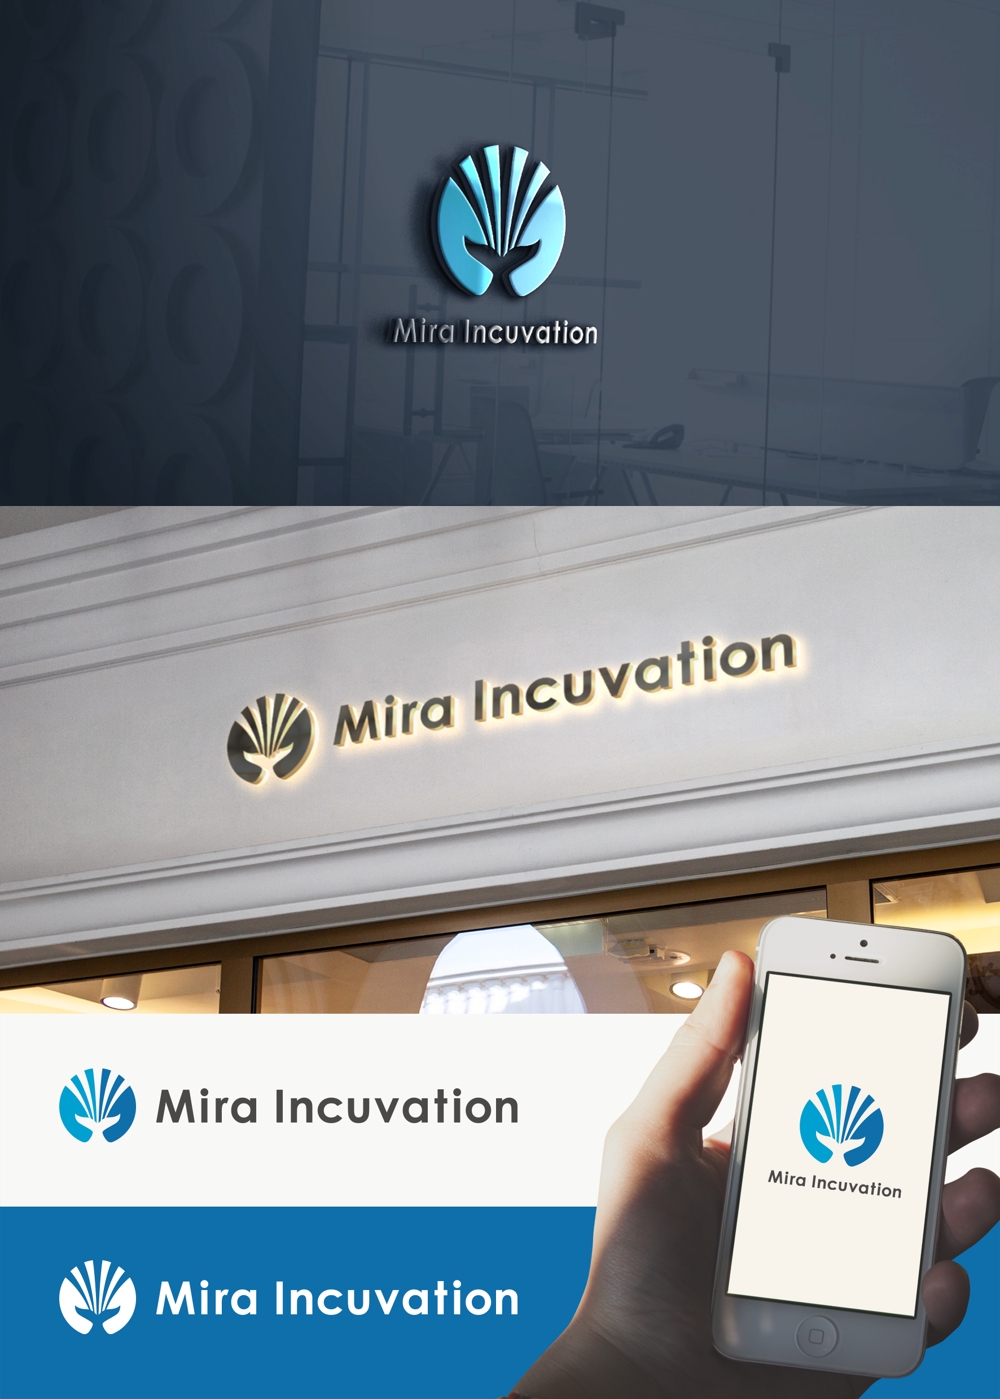 mira-incuvation_a4.jpg